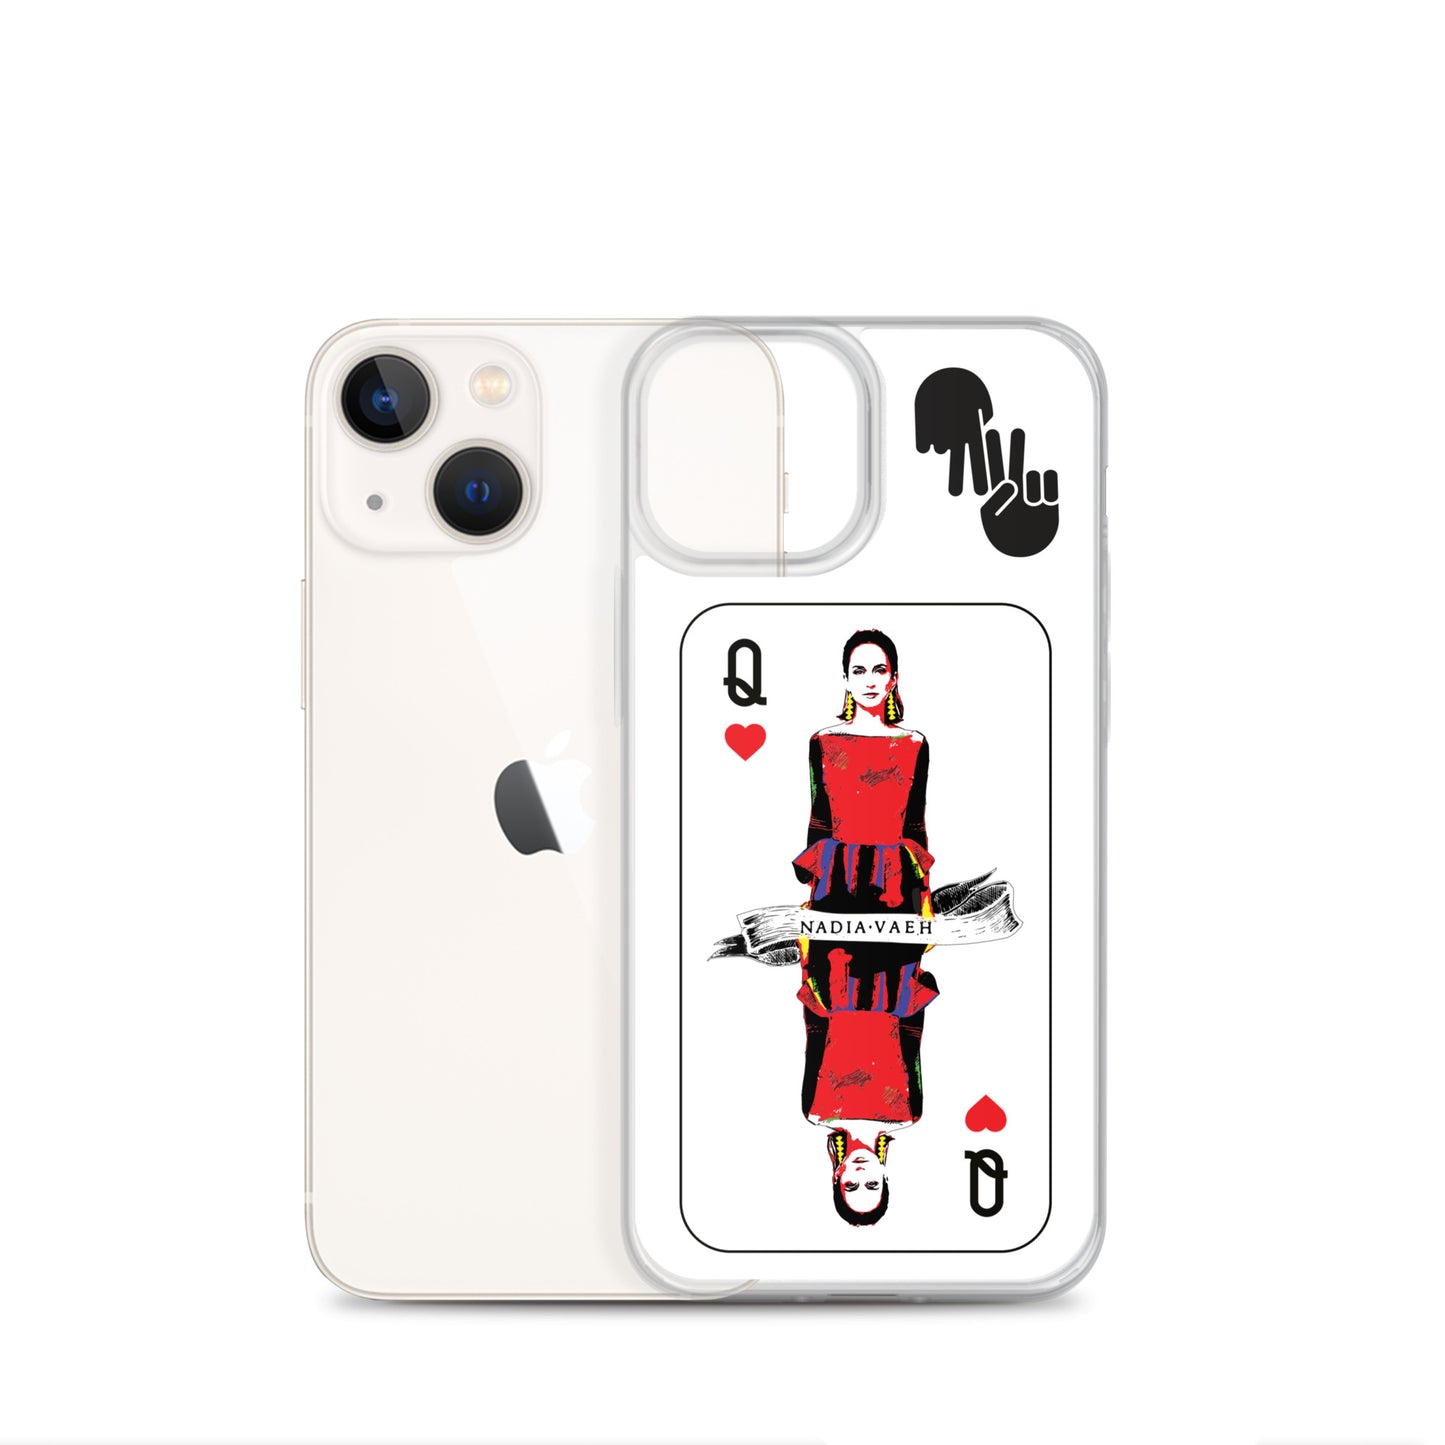 Nadia Vaeh - "Queen of Hearts" Case for iPhone®